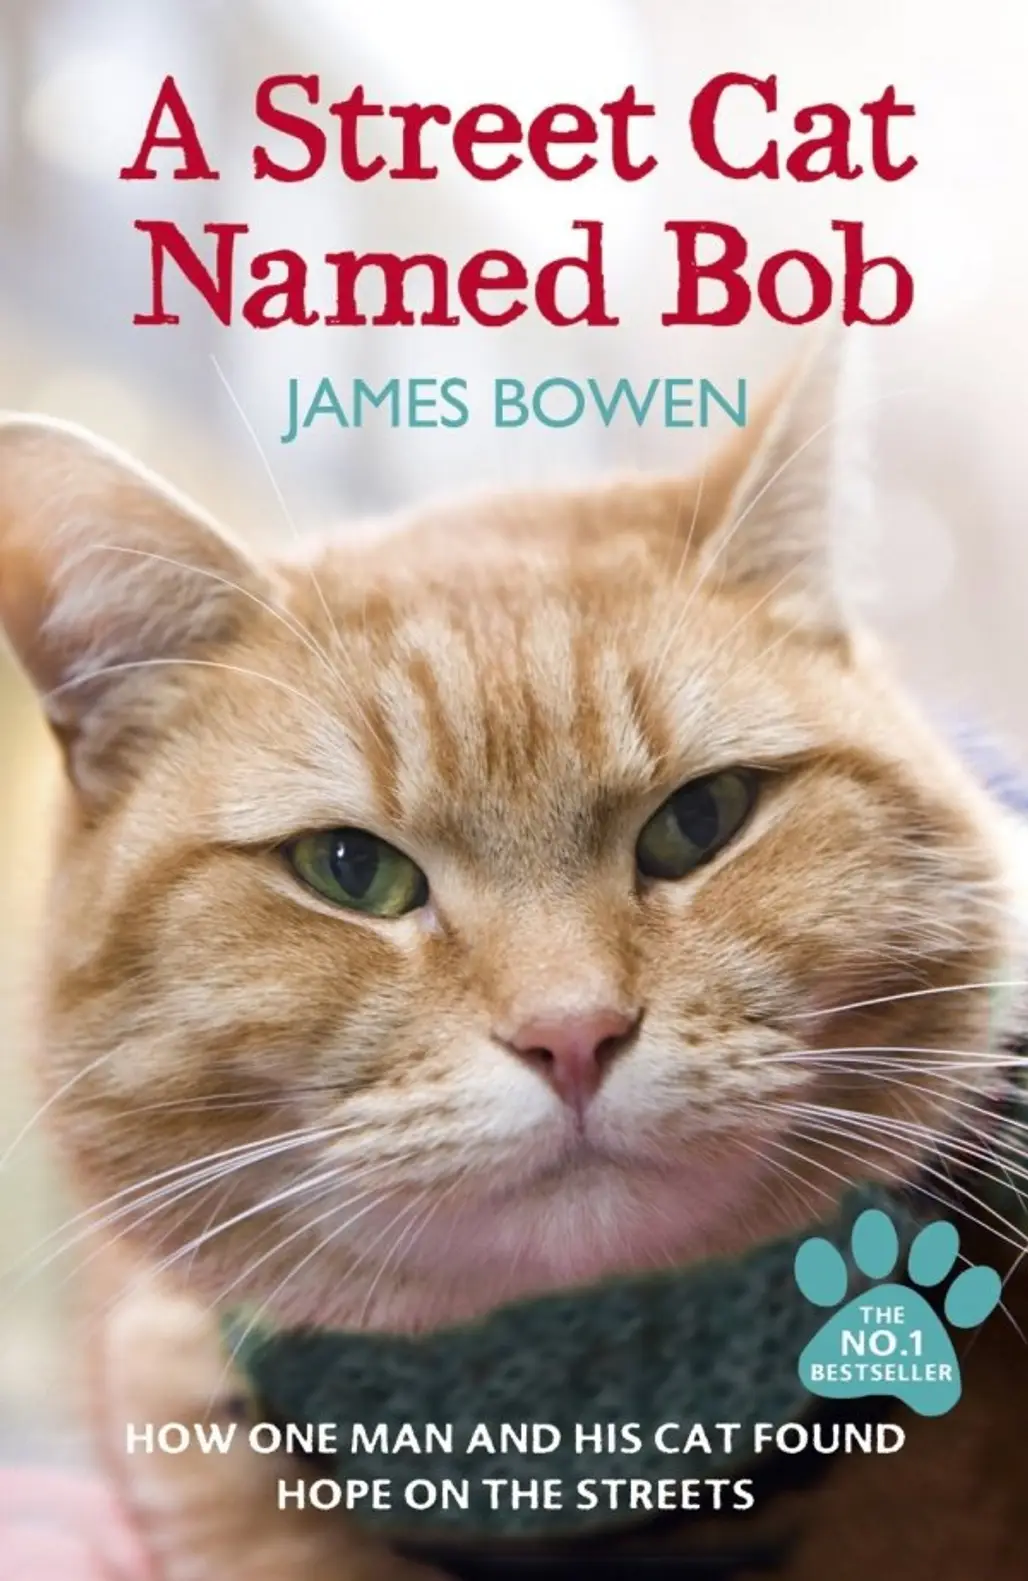 A Street Cat Named Bob (James Bowen)